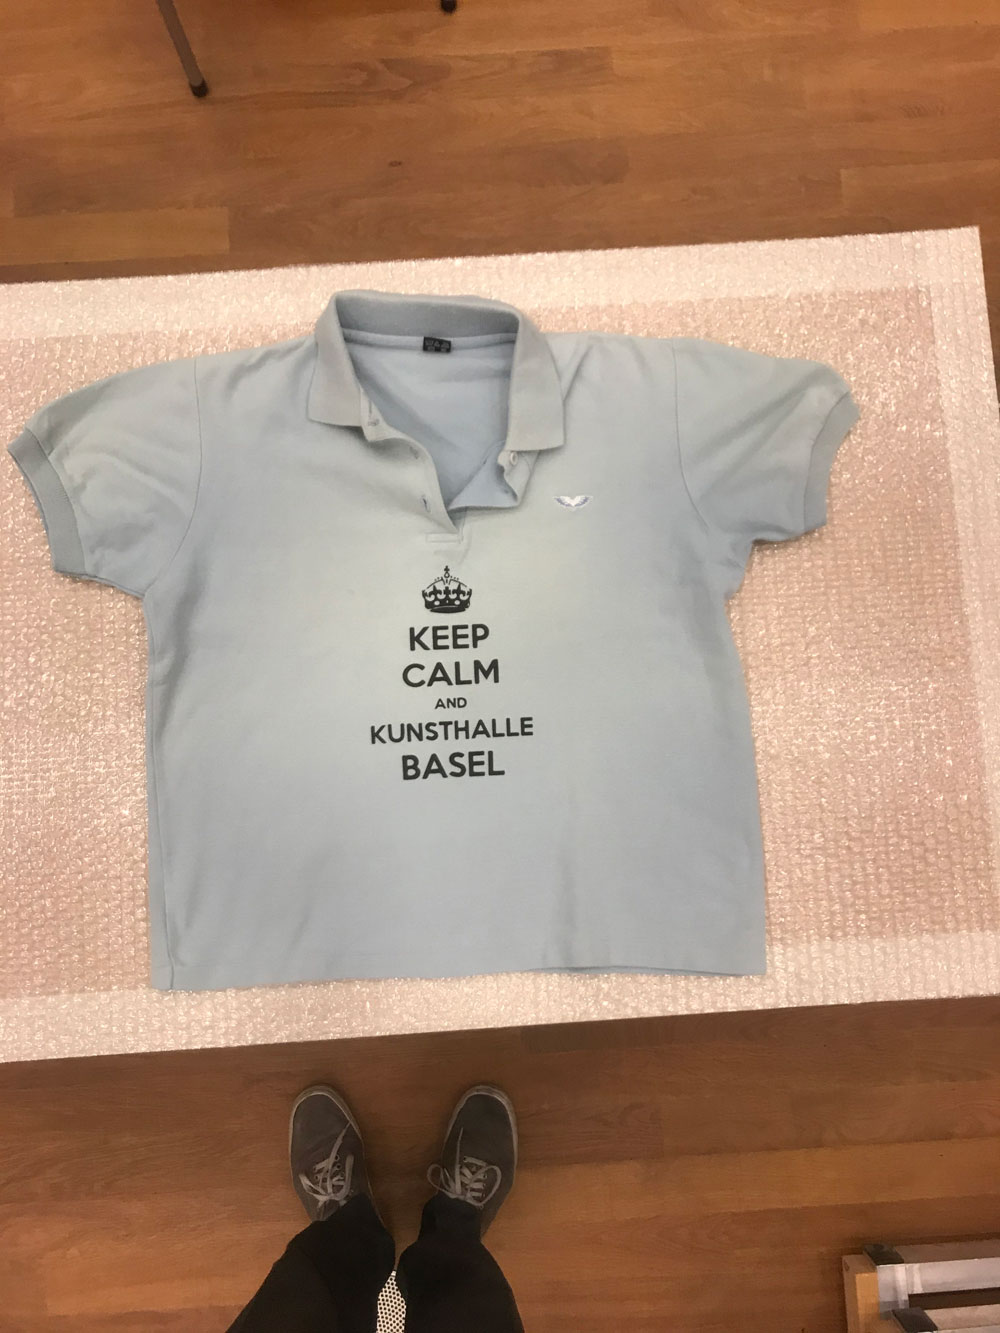 Brain Freeze Shirts - Keep Calm and Kunsthalle Basel